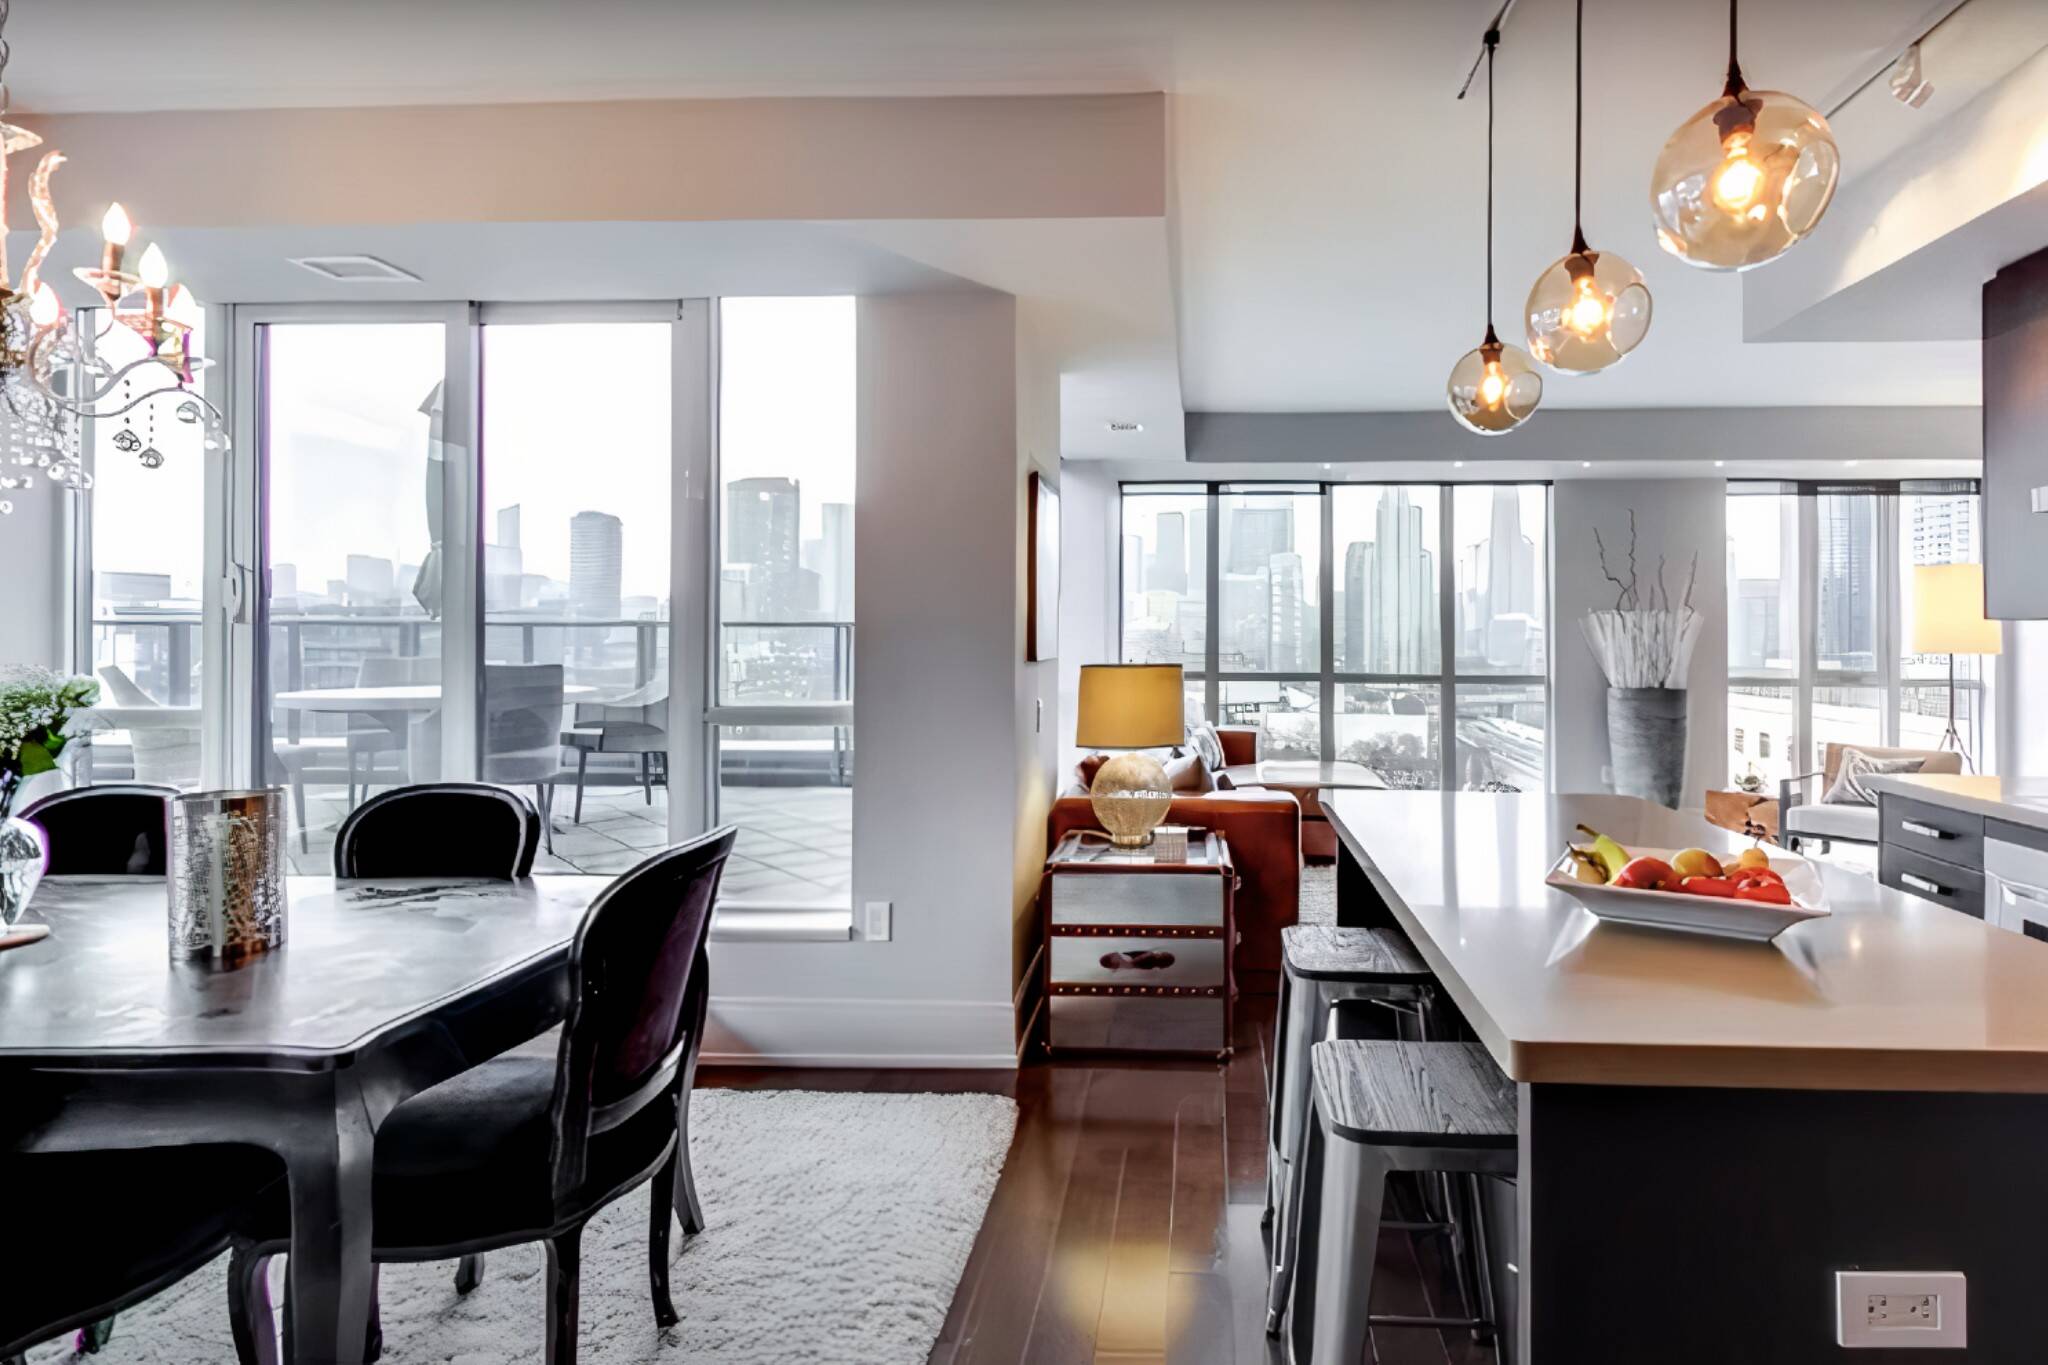 Video provides the ultimate sneak peek into Shawn Mendes' Toronto condo